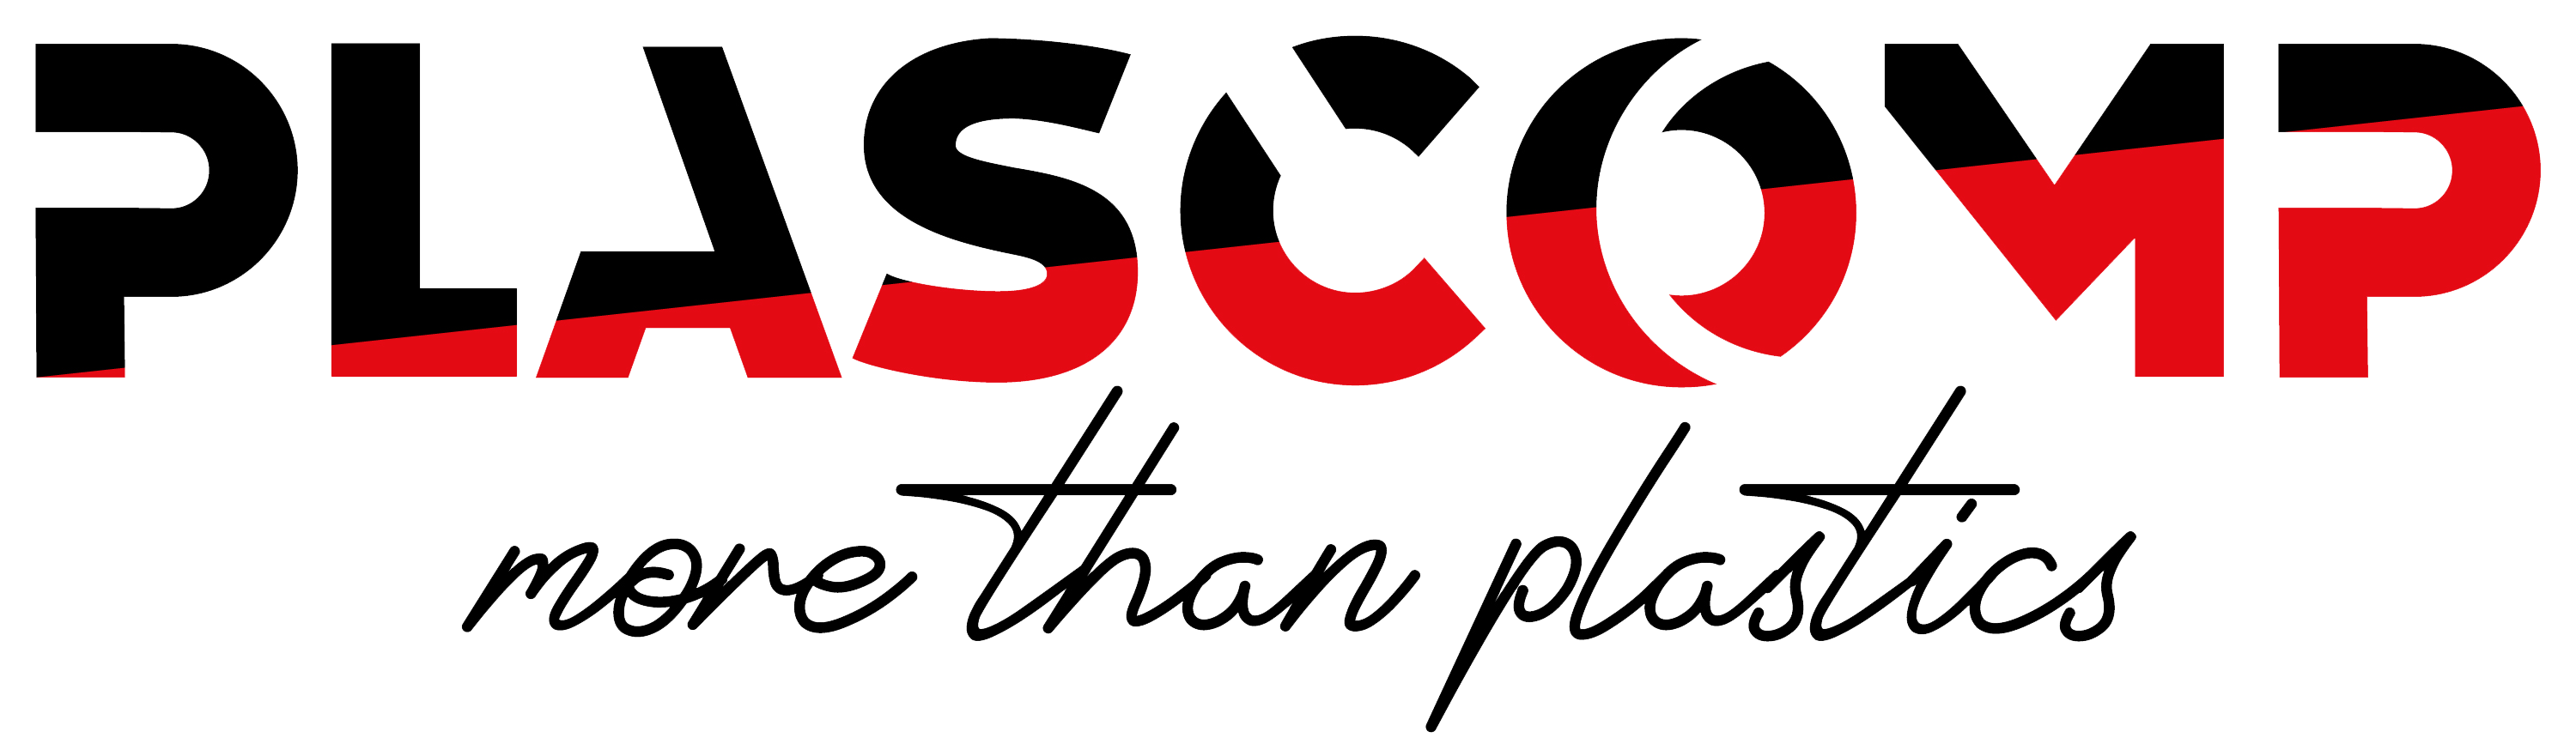 Plascomp-Logo